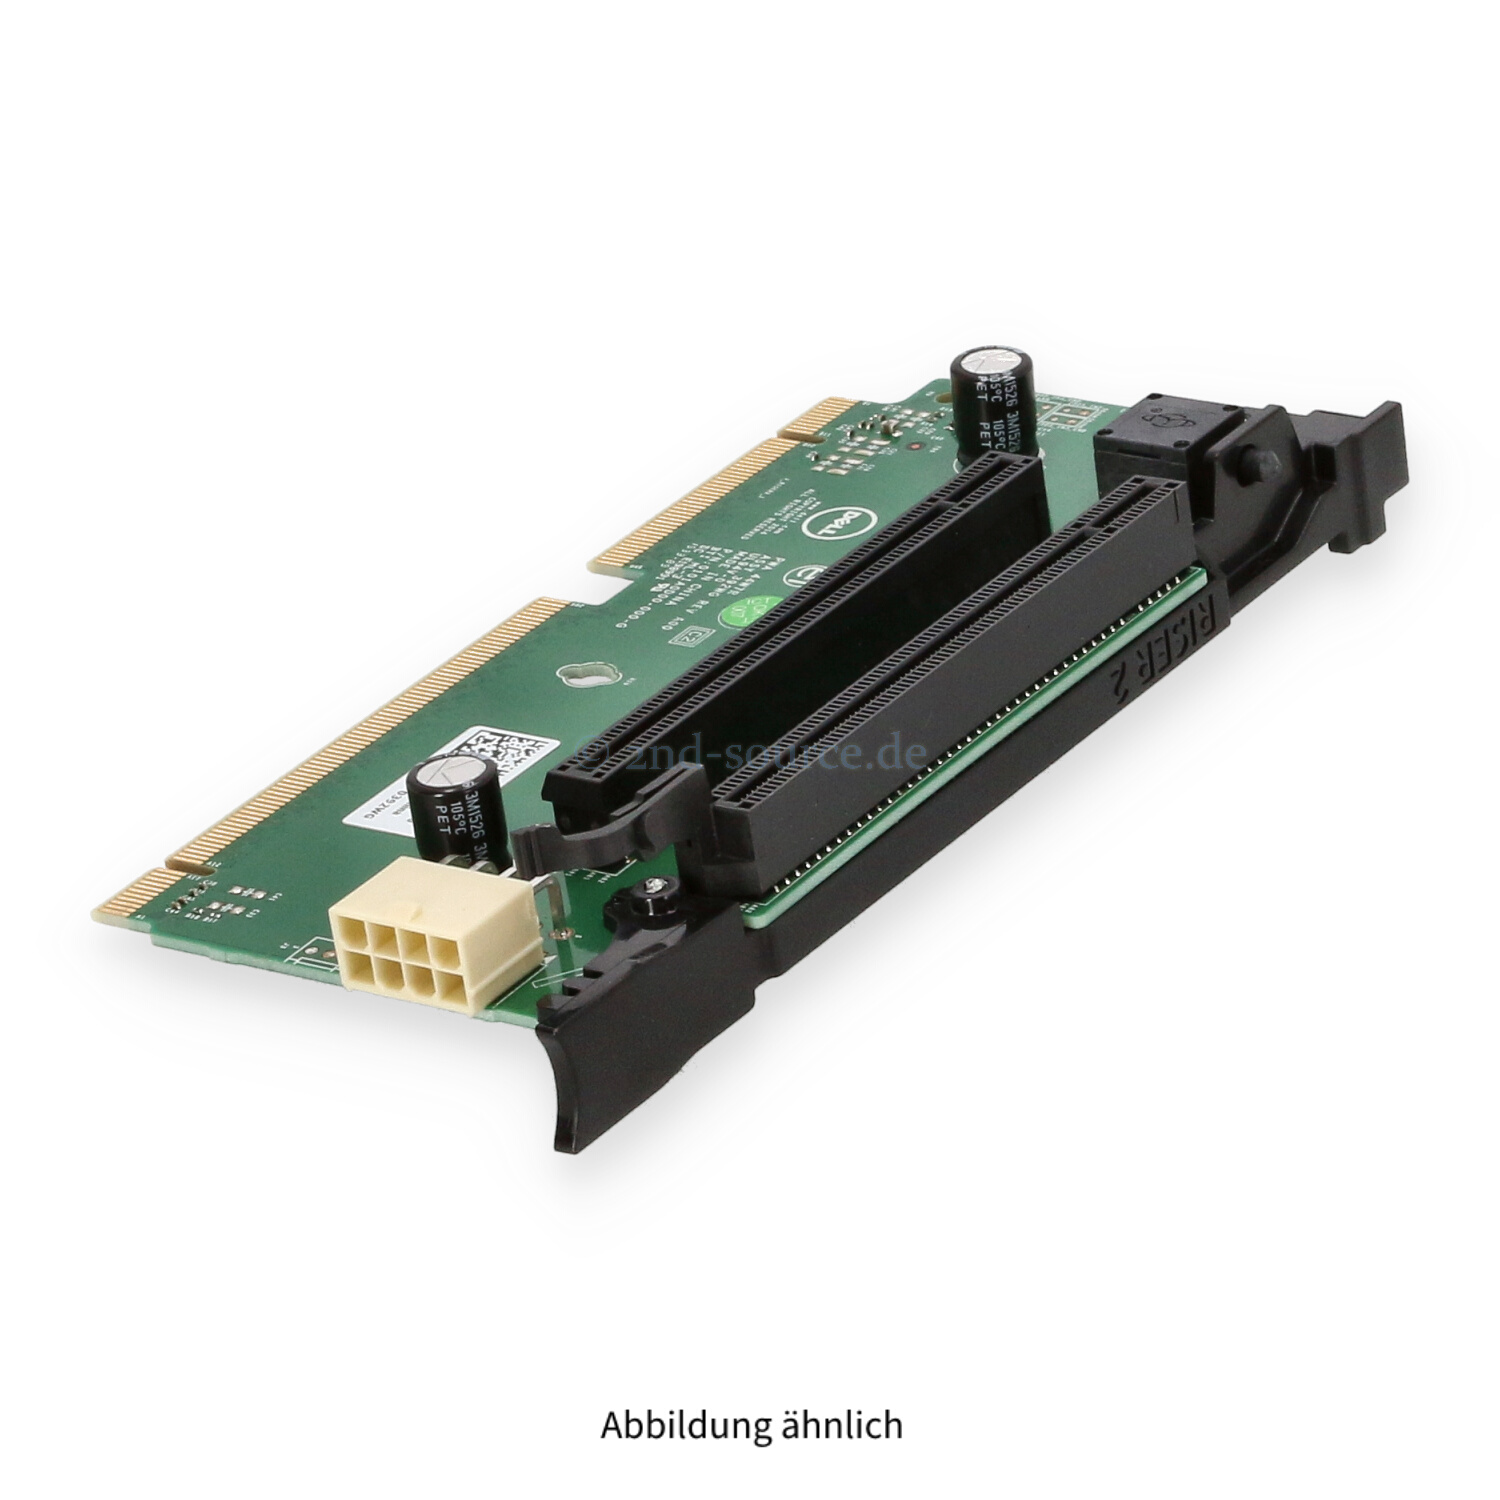 Dell 2x8 PCI Riser 2 Center Default PowerEdge R730 R730XD 392WG 0392WG